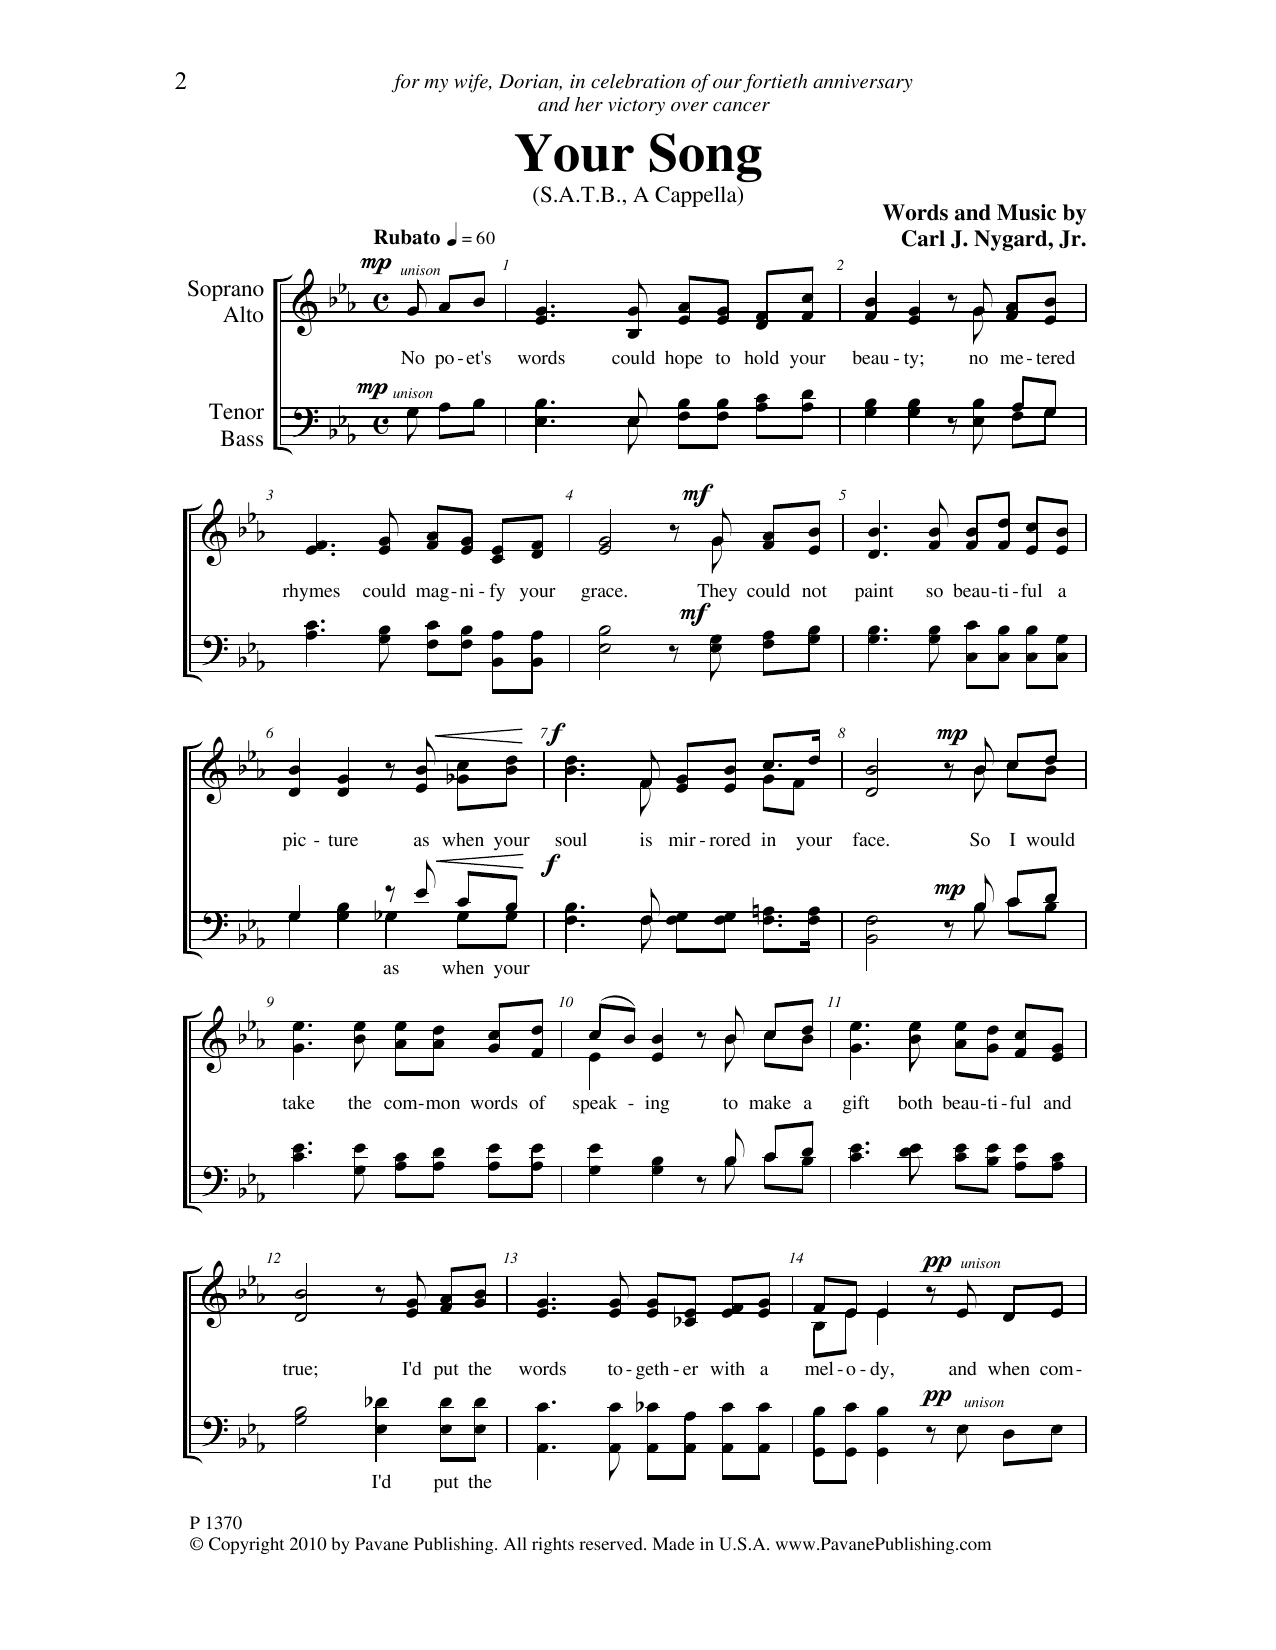 Carl Nygard, Jr. Your Song Sheet Music Notes & Chords for SATB Choir - Download or Print PDF